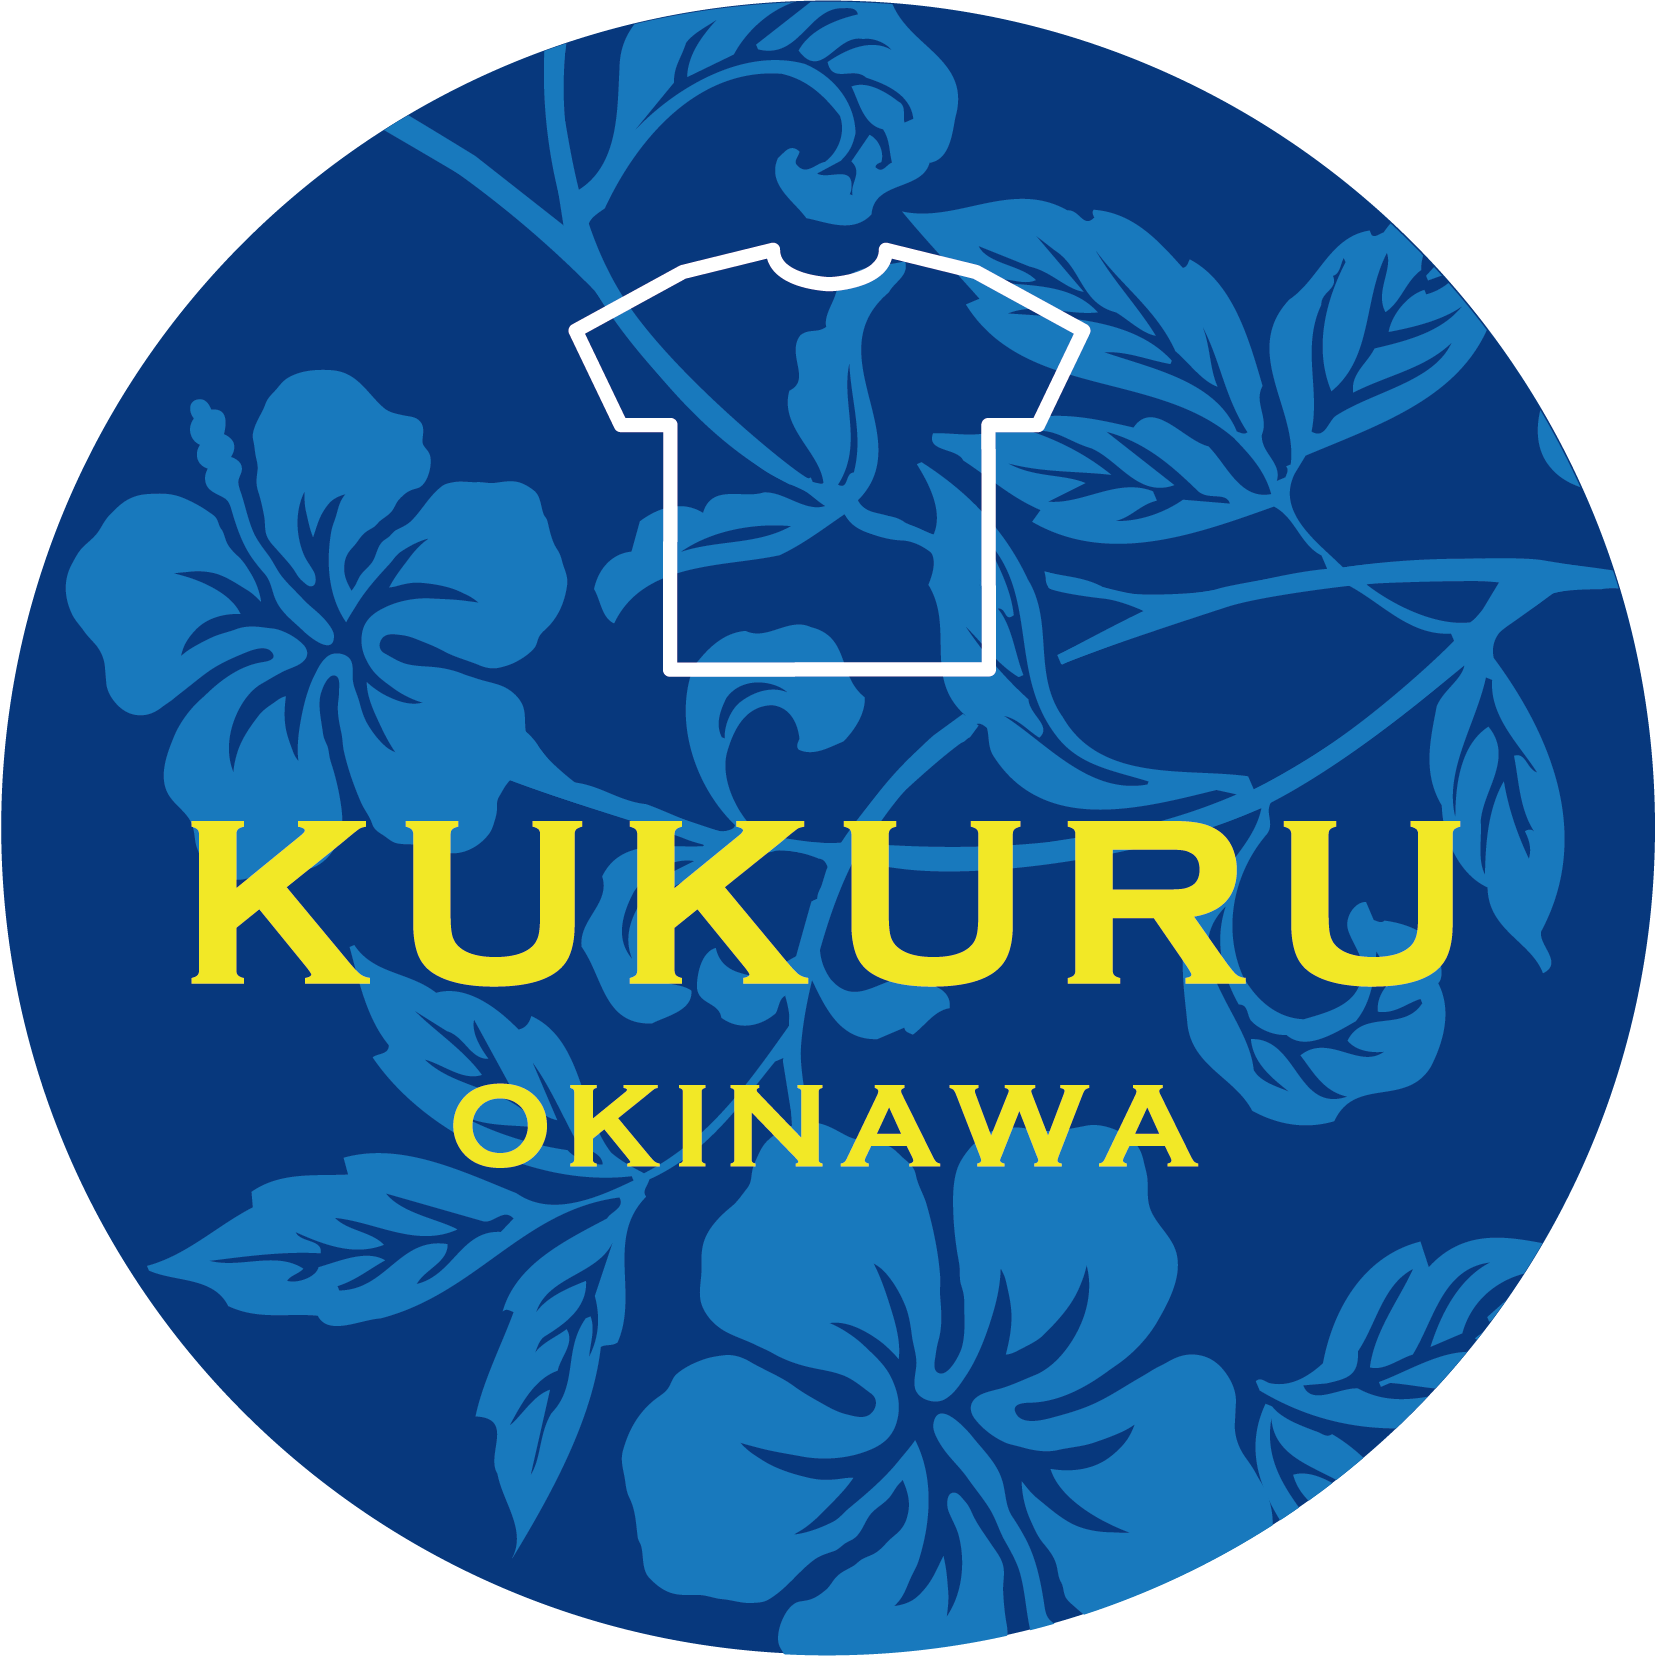 KUKURU OKINAWA